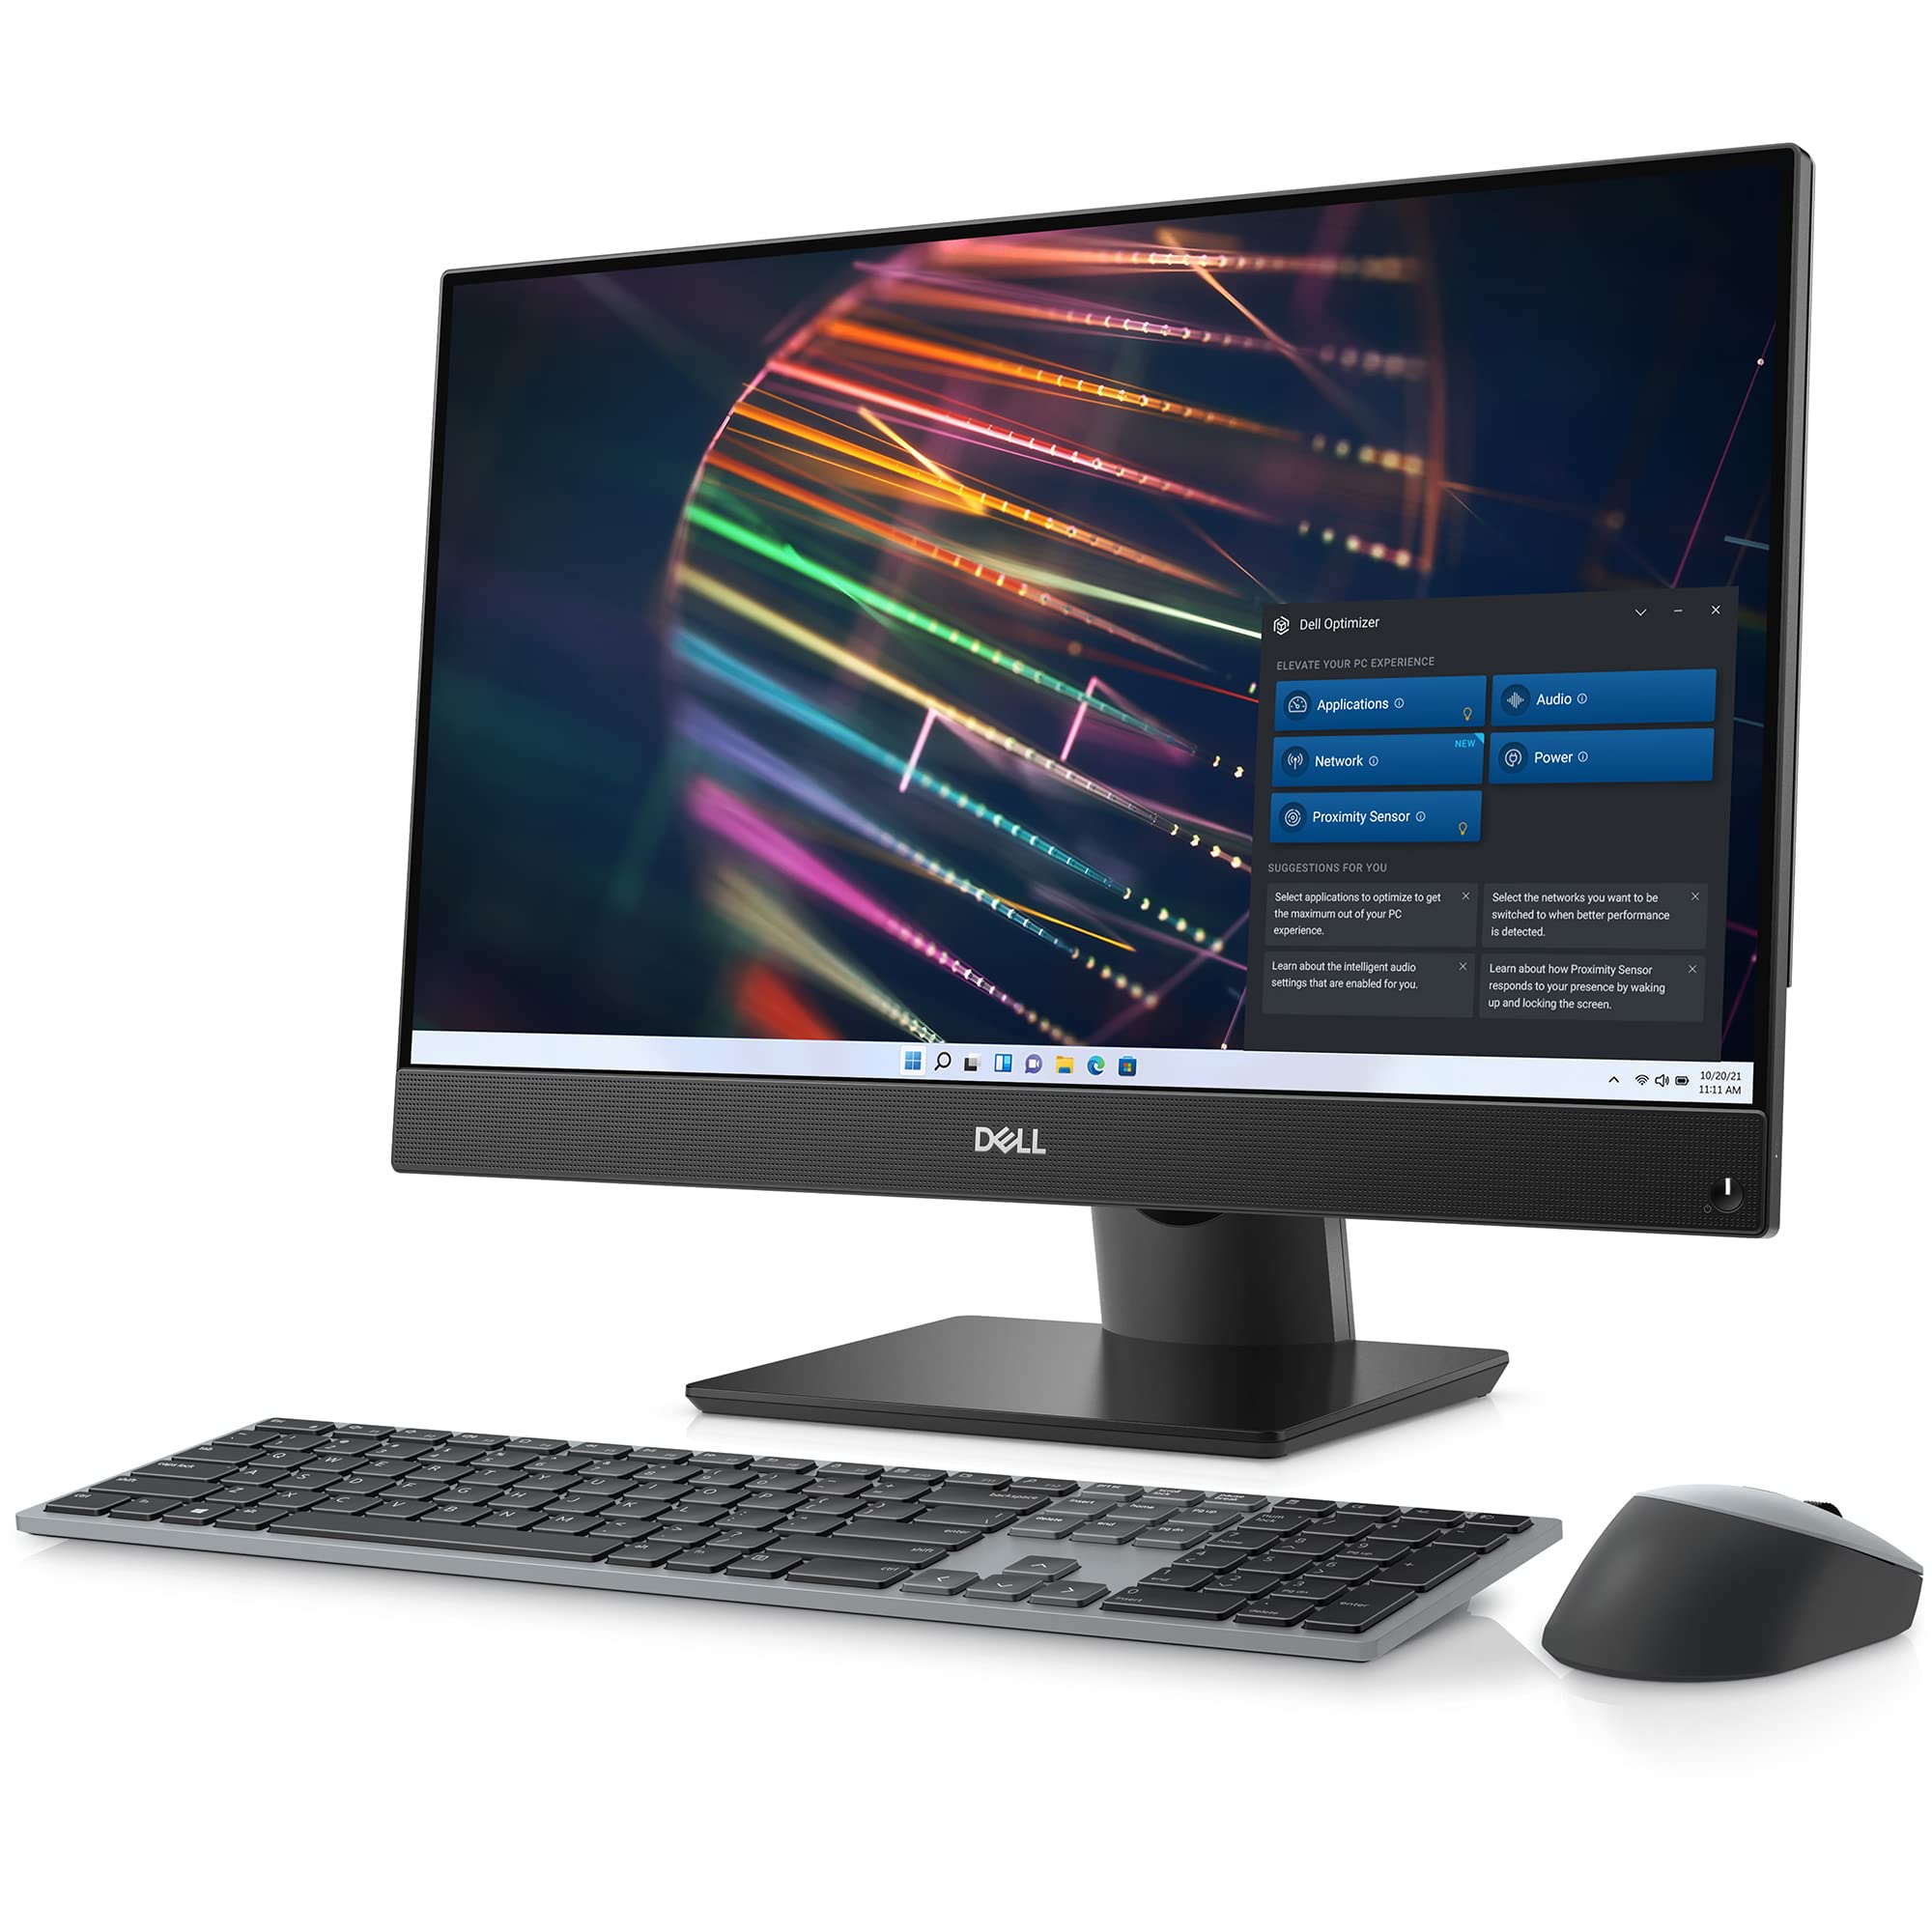 Dell OptiPlex 7400 23.8" Full HD All-in-One Desktop Computer - 12th Gen Intel Core i5-12500 6-Core up to 4.60 GHz Processor, 16GB RAM, 512GB NVMe SSD + 1TB HDD, Intel UHD Graphics 770, Windows 10 Pro